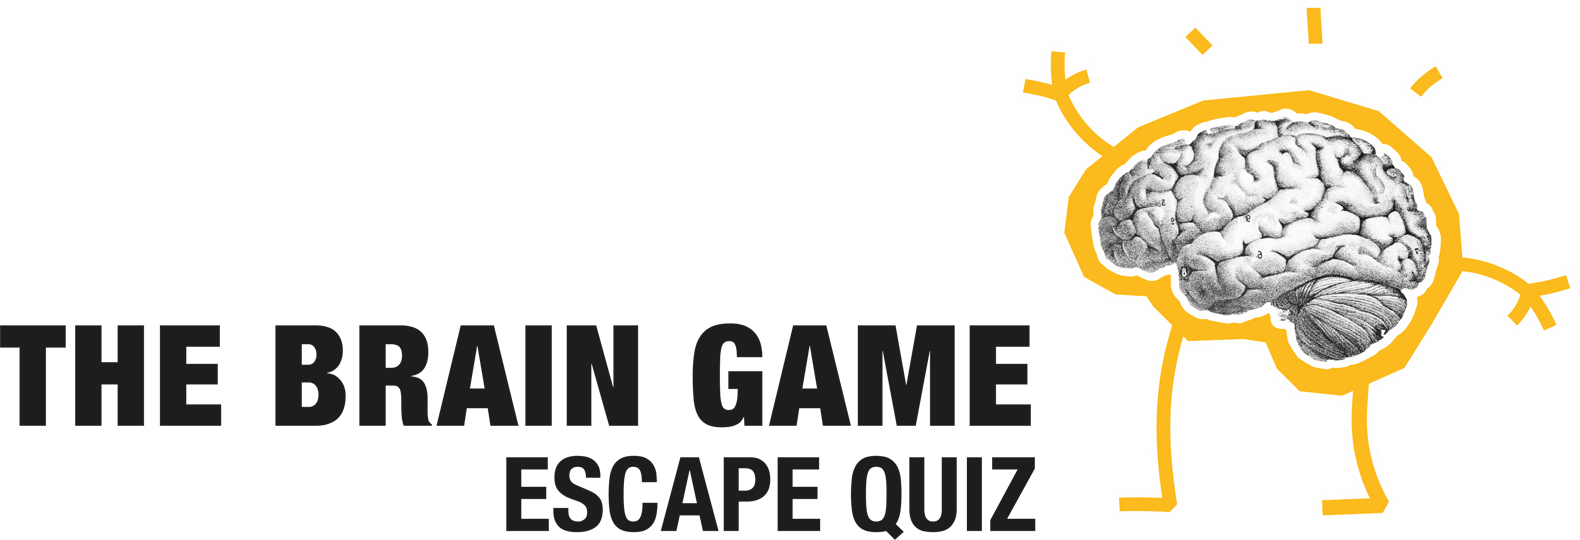 ESCAPEQUIZ - THE BRAIN GAME